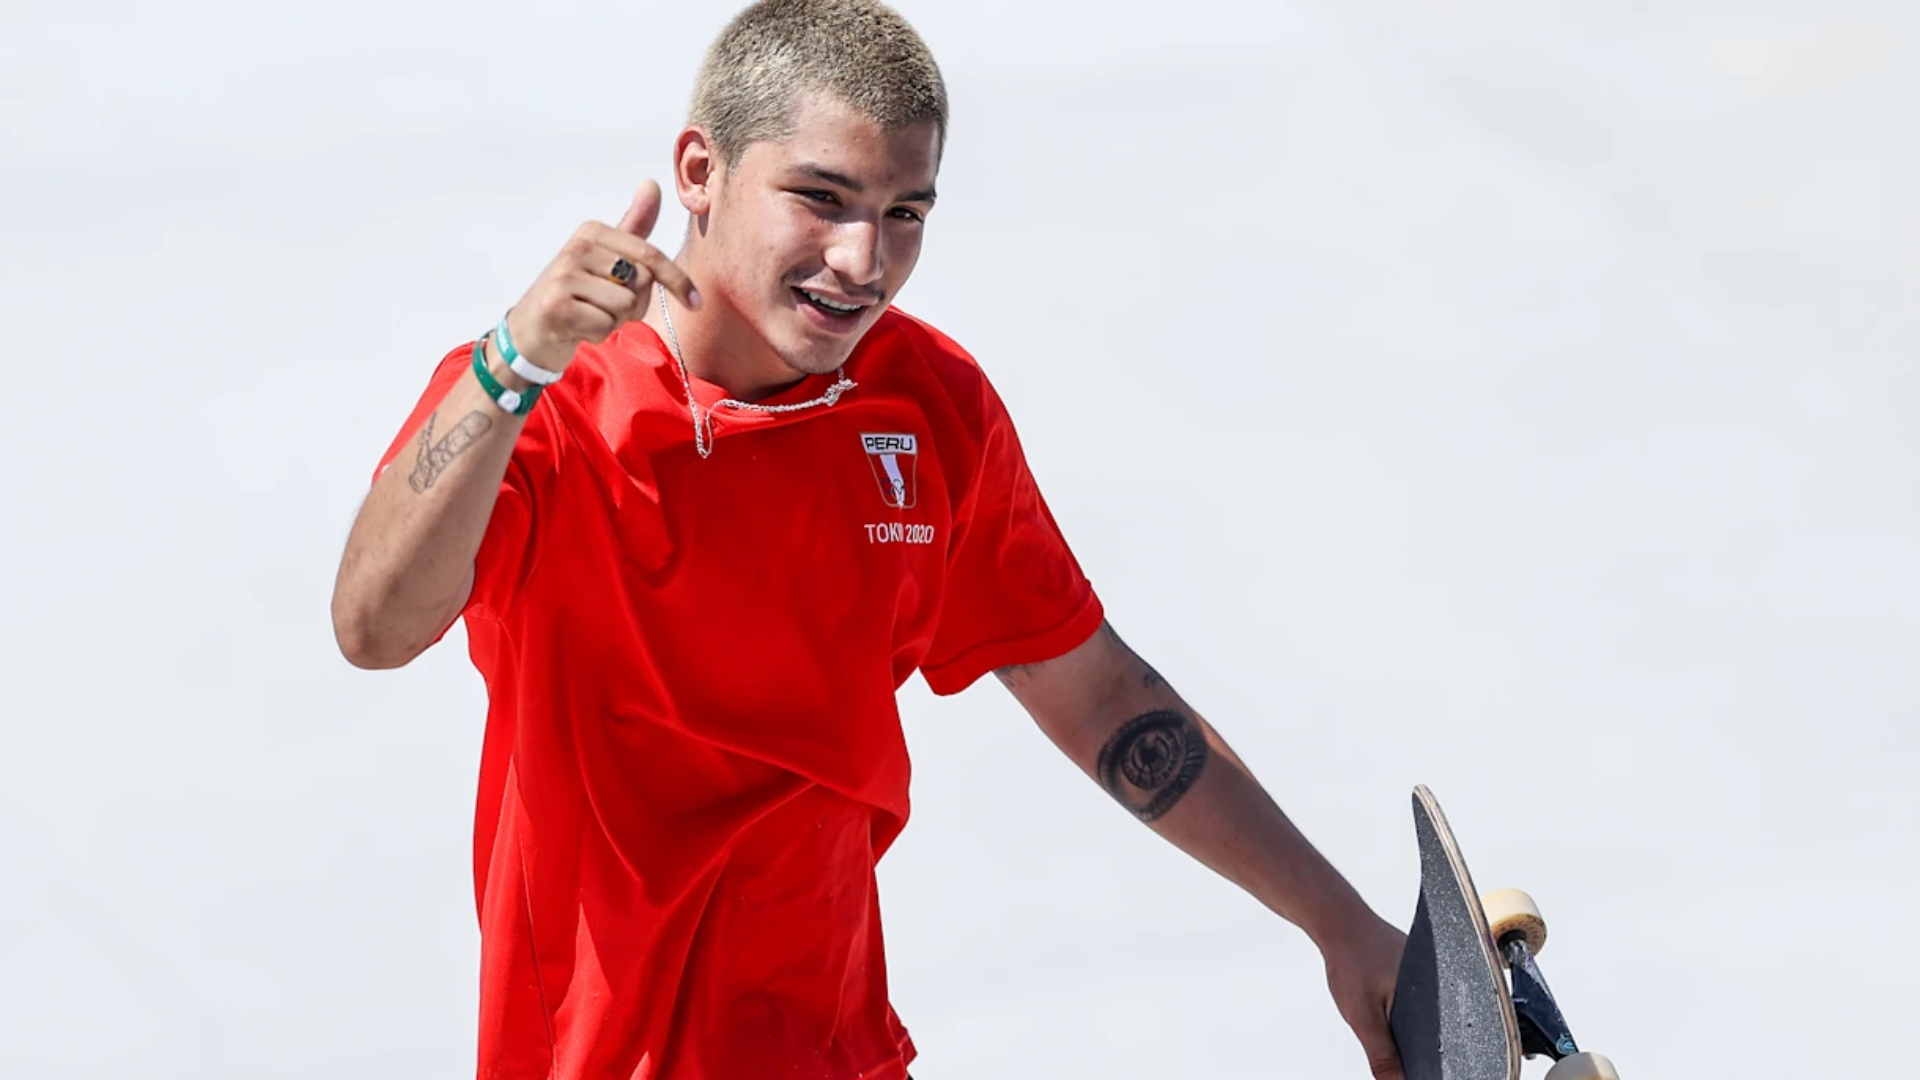 Angelo Caro se encuentra participando en el Mundial de Skatebording en Emiratos Árabes. (olympics)